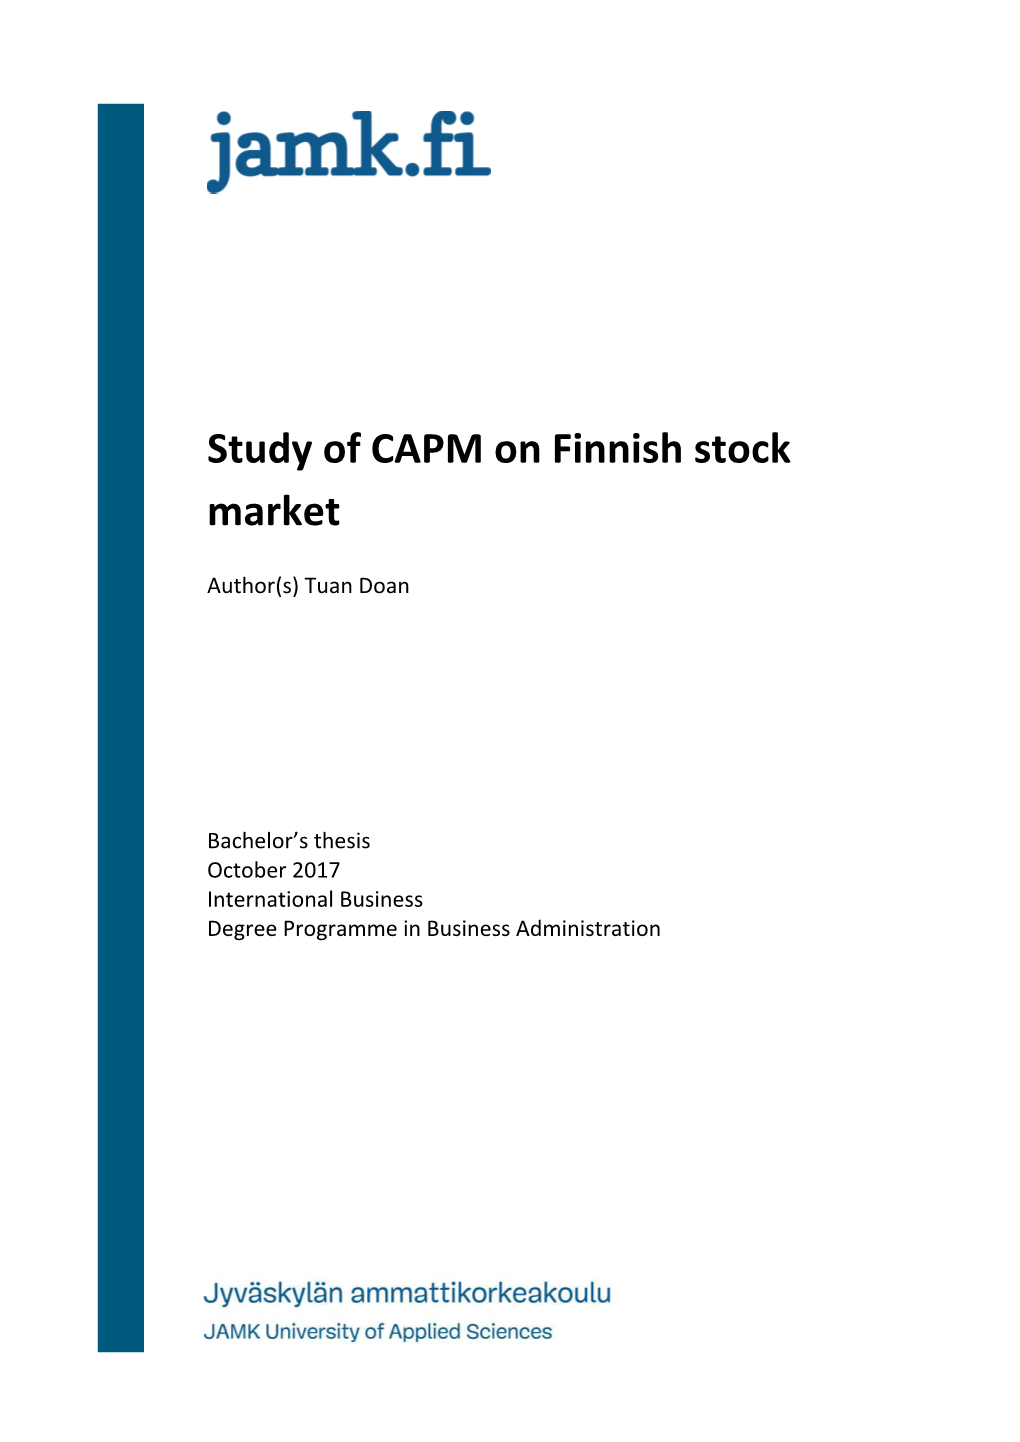 Study of CAPM on Finnish Stock Market